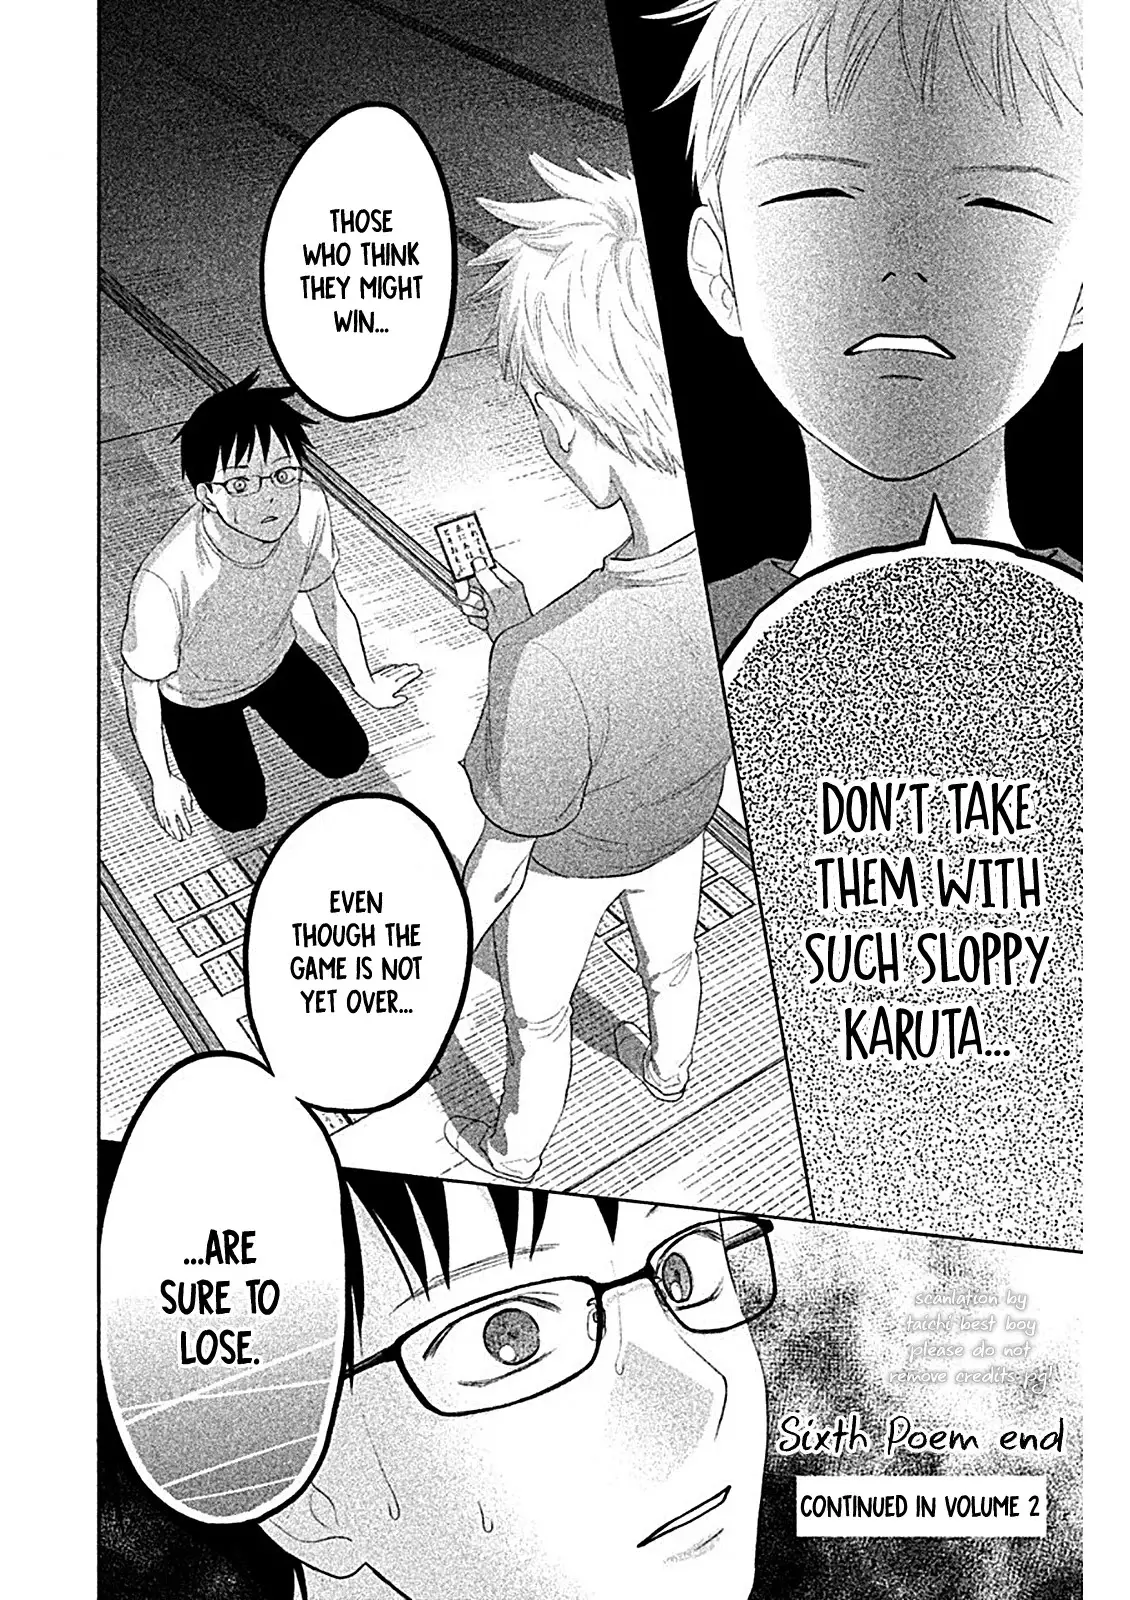 Chihayafuru: Middle School Arc - 6 page 29